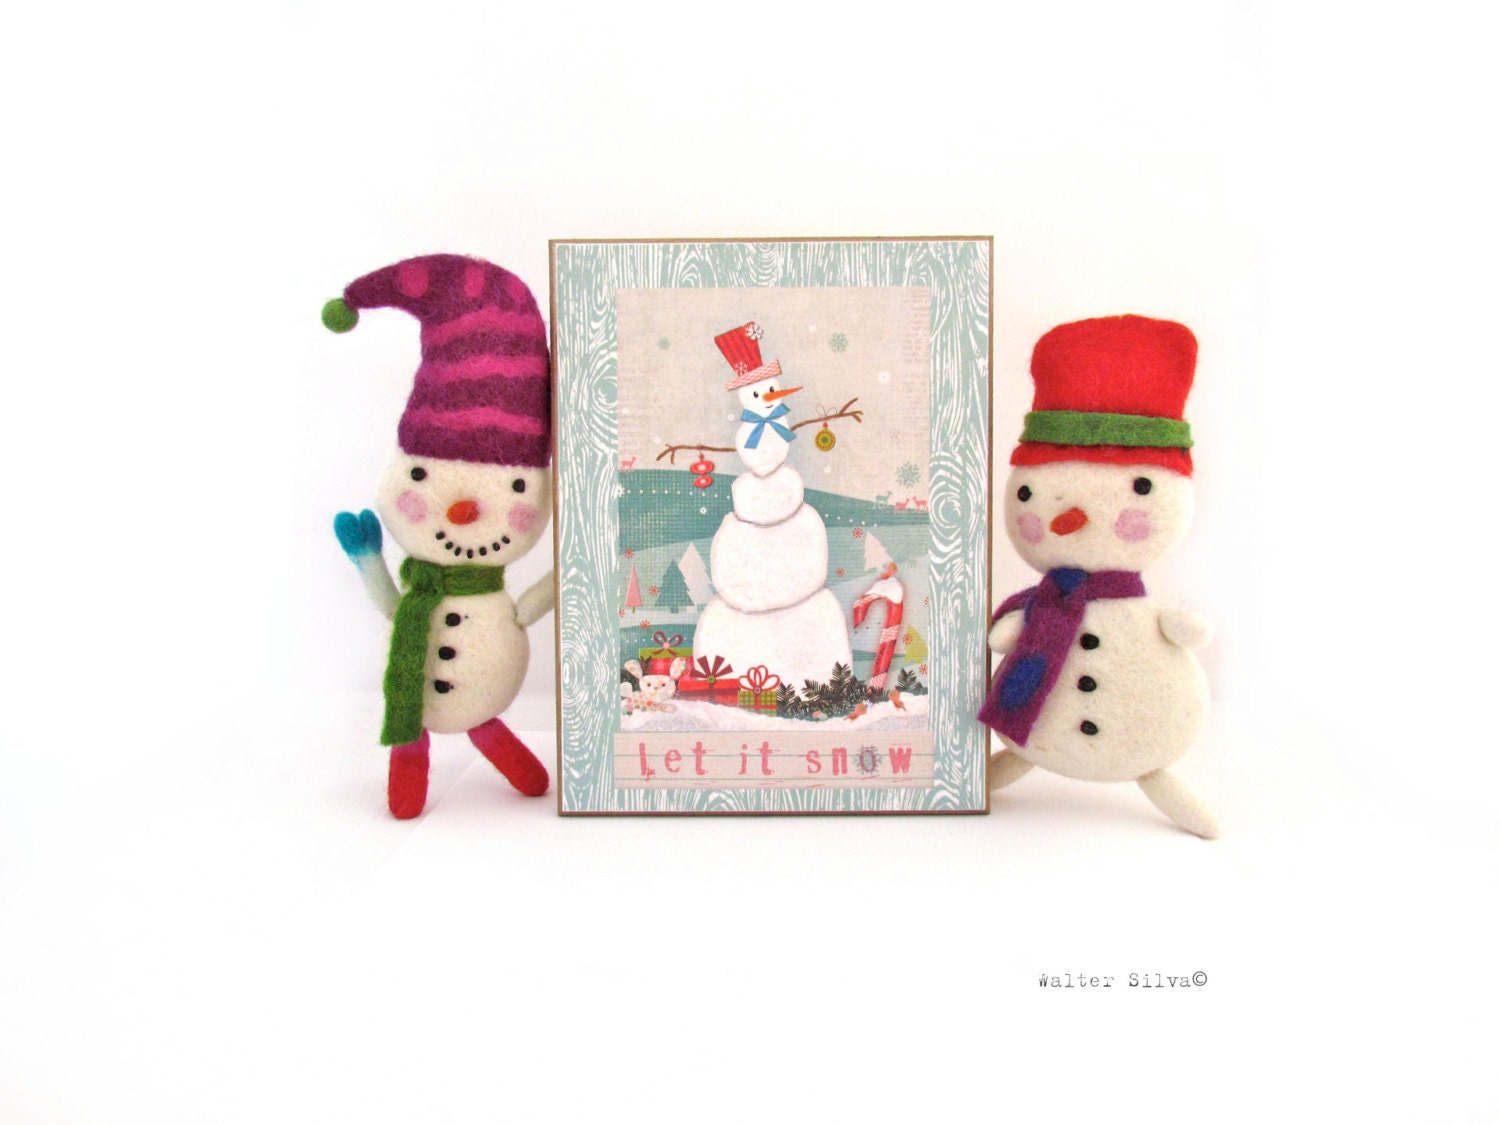 Woodland Snowman Wall Decoration - Let it Snow, Let it snow, let it snow Holiday Decoration - Modern Christmas Housewarming Gift - WalterSilva